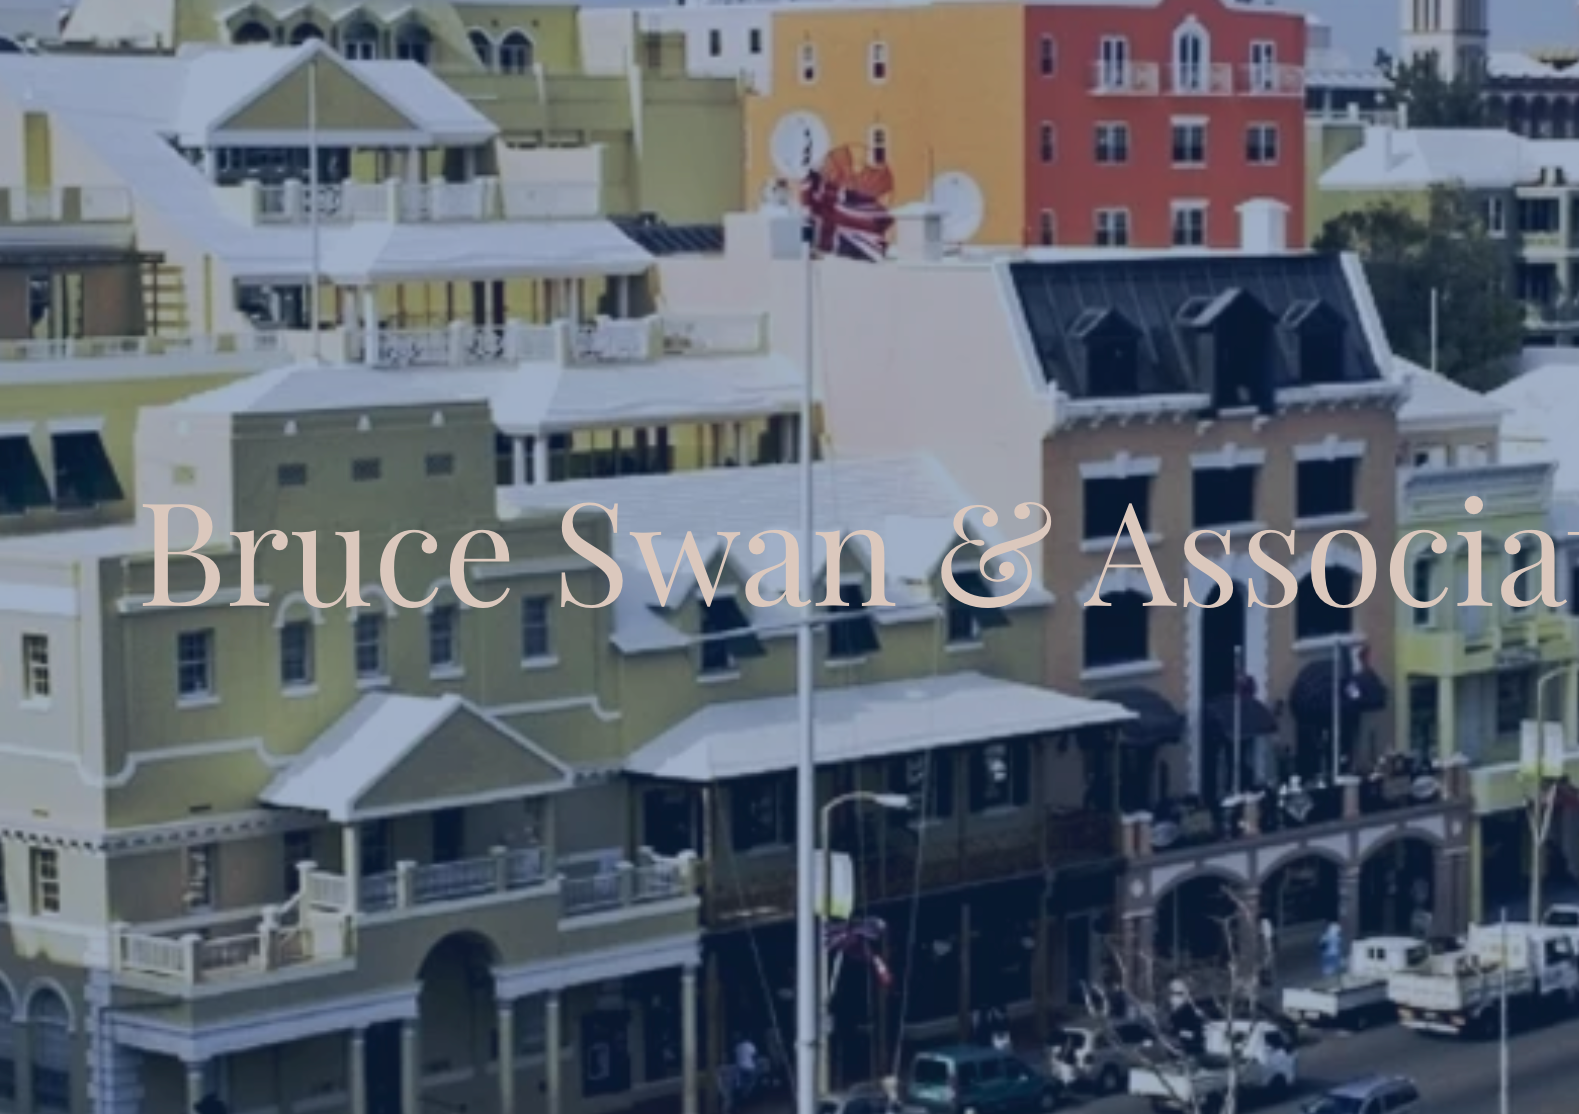 Bruce Swan & Associates